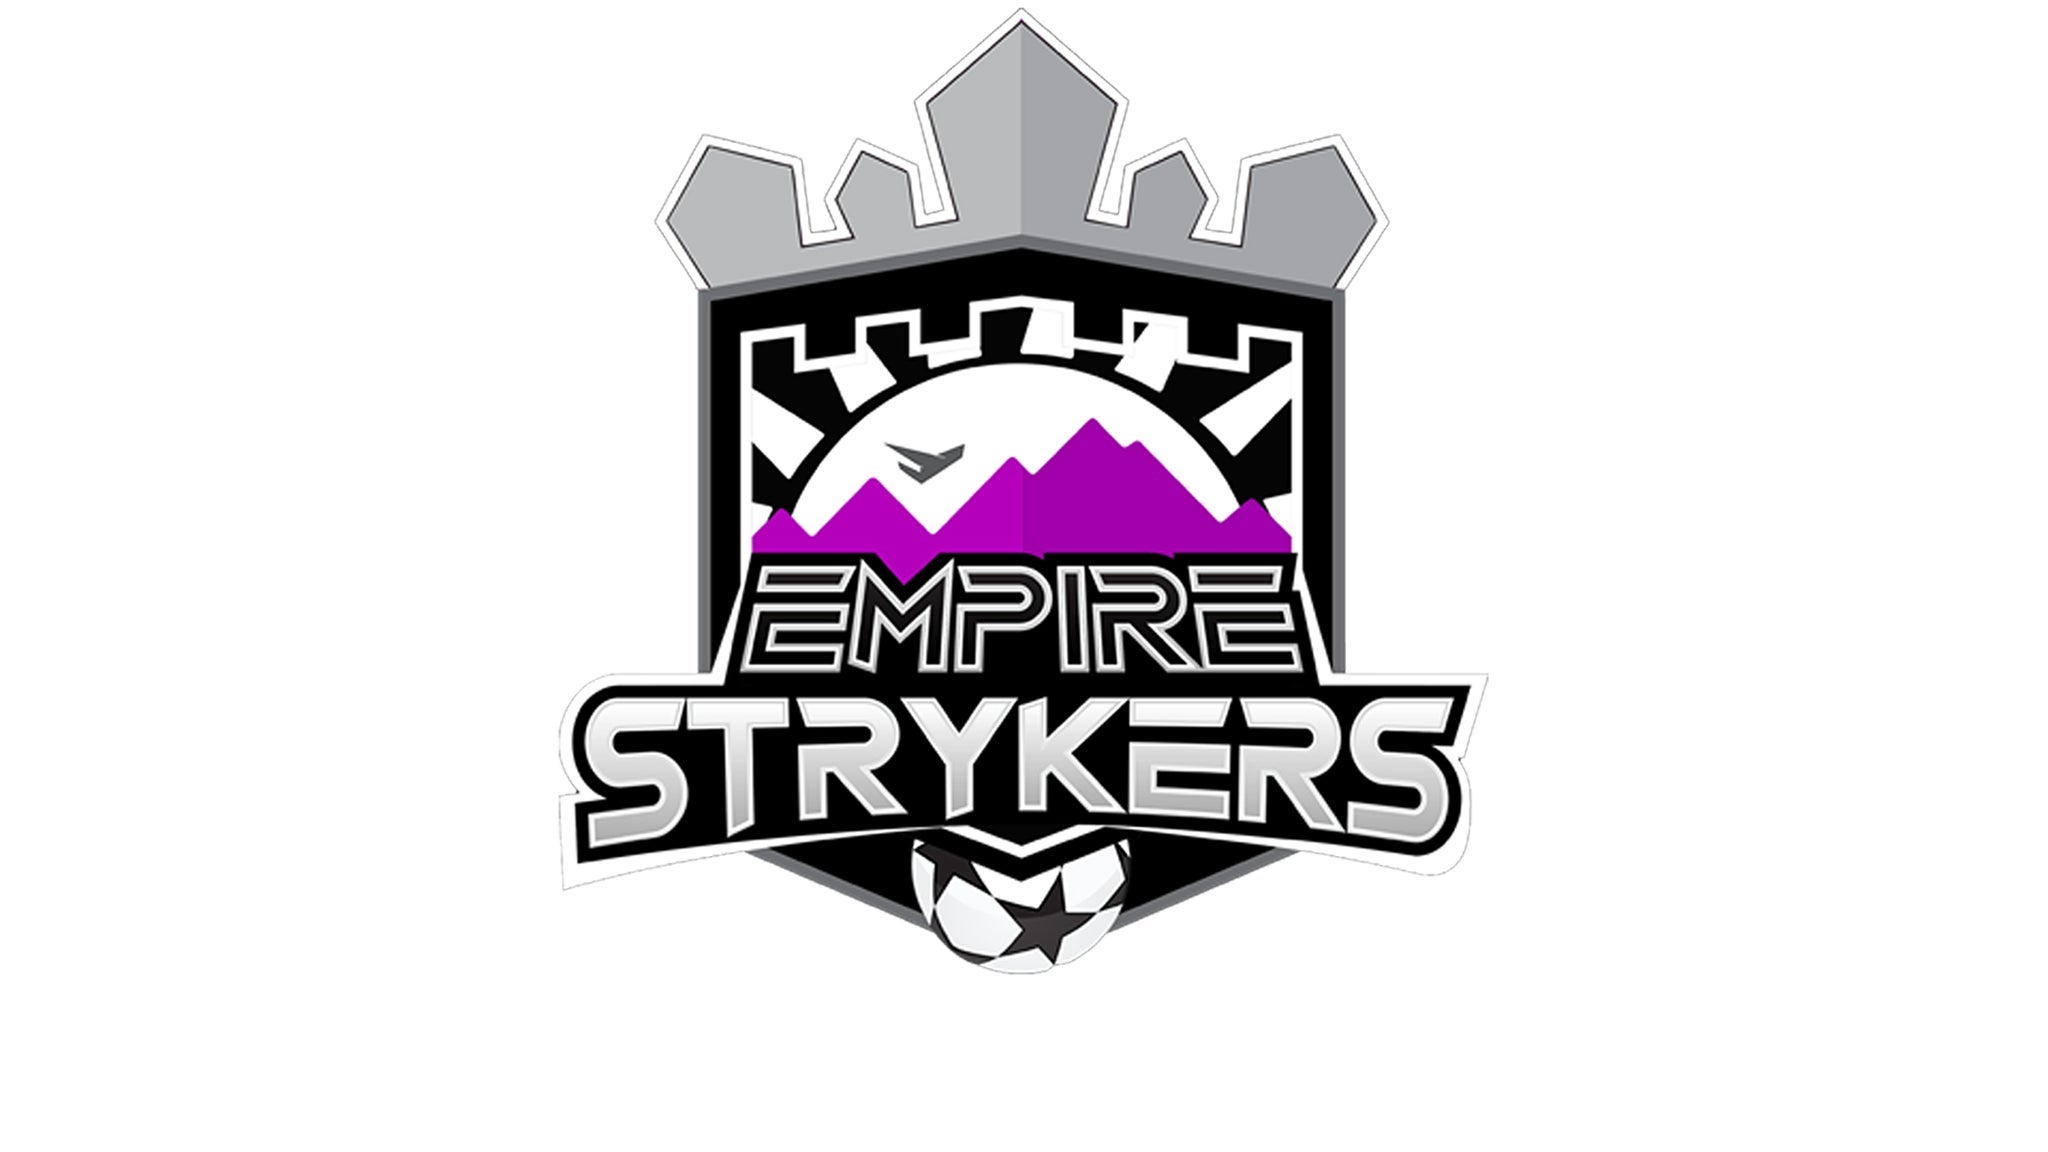 Empire Strykers vs. Tacoma at Toyota Arena